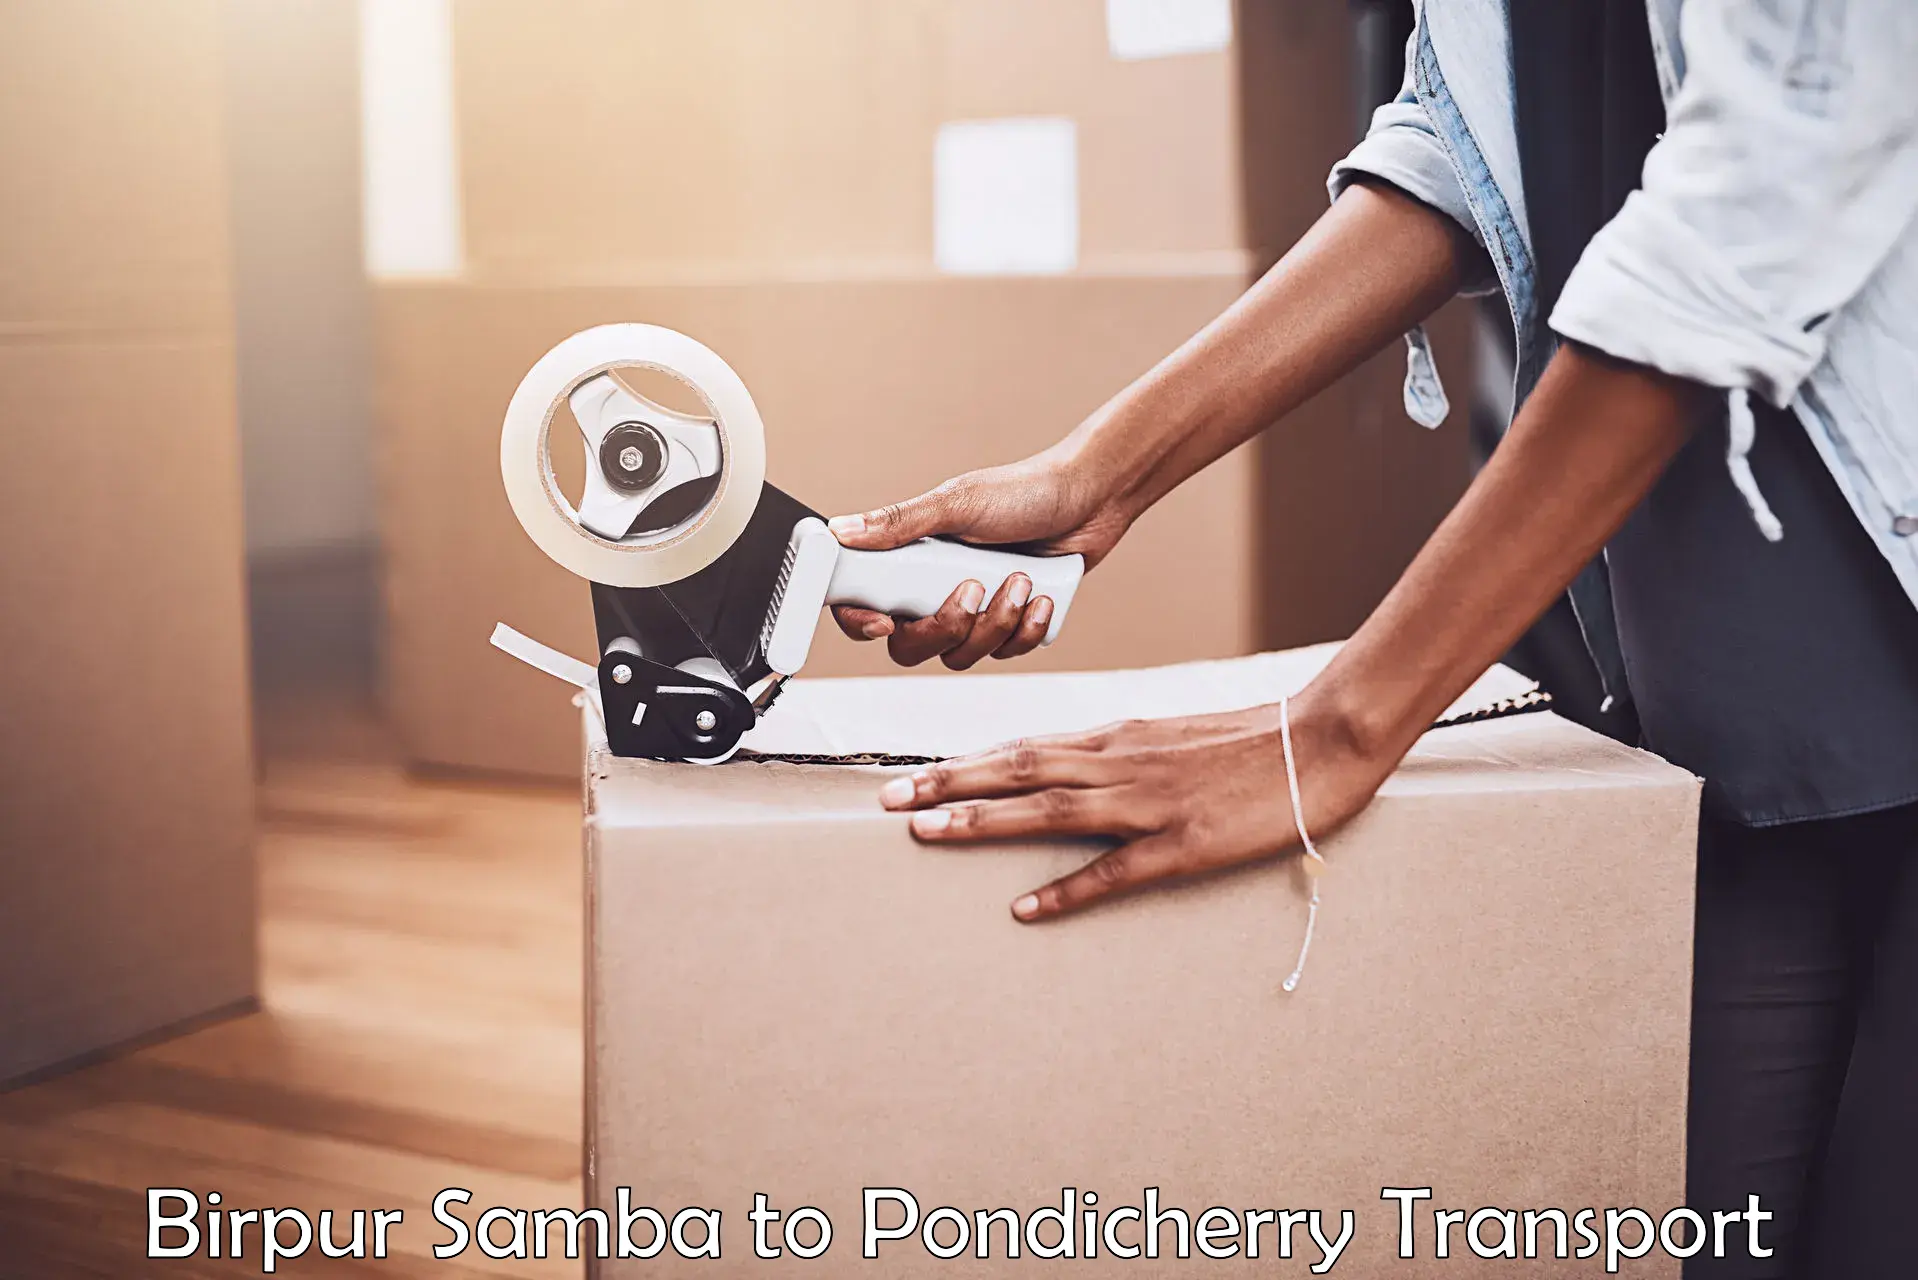 Furniture transport service Birpur Samba to Pondicherry